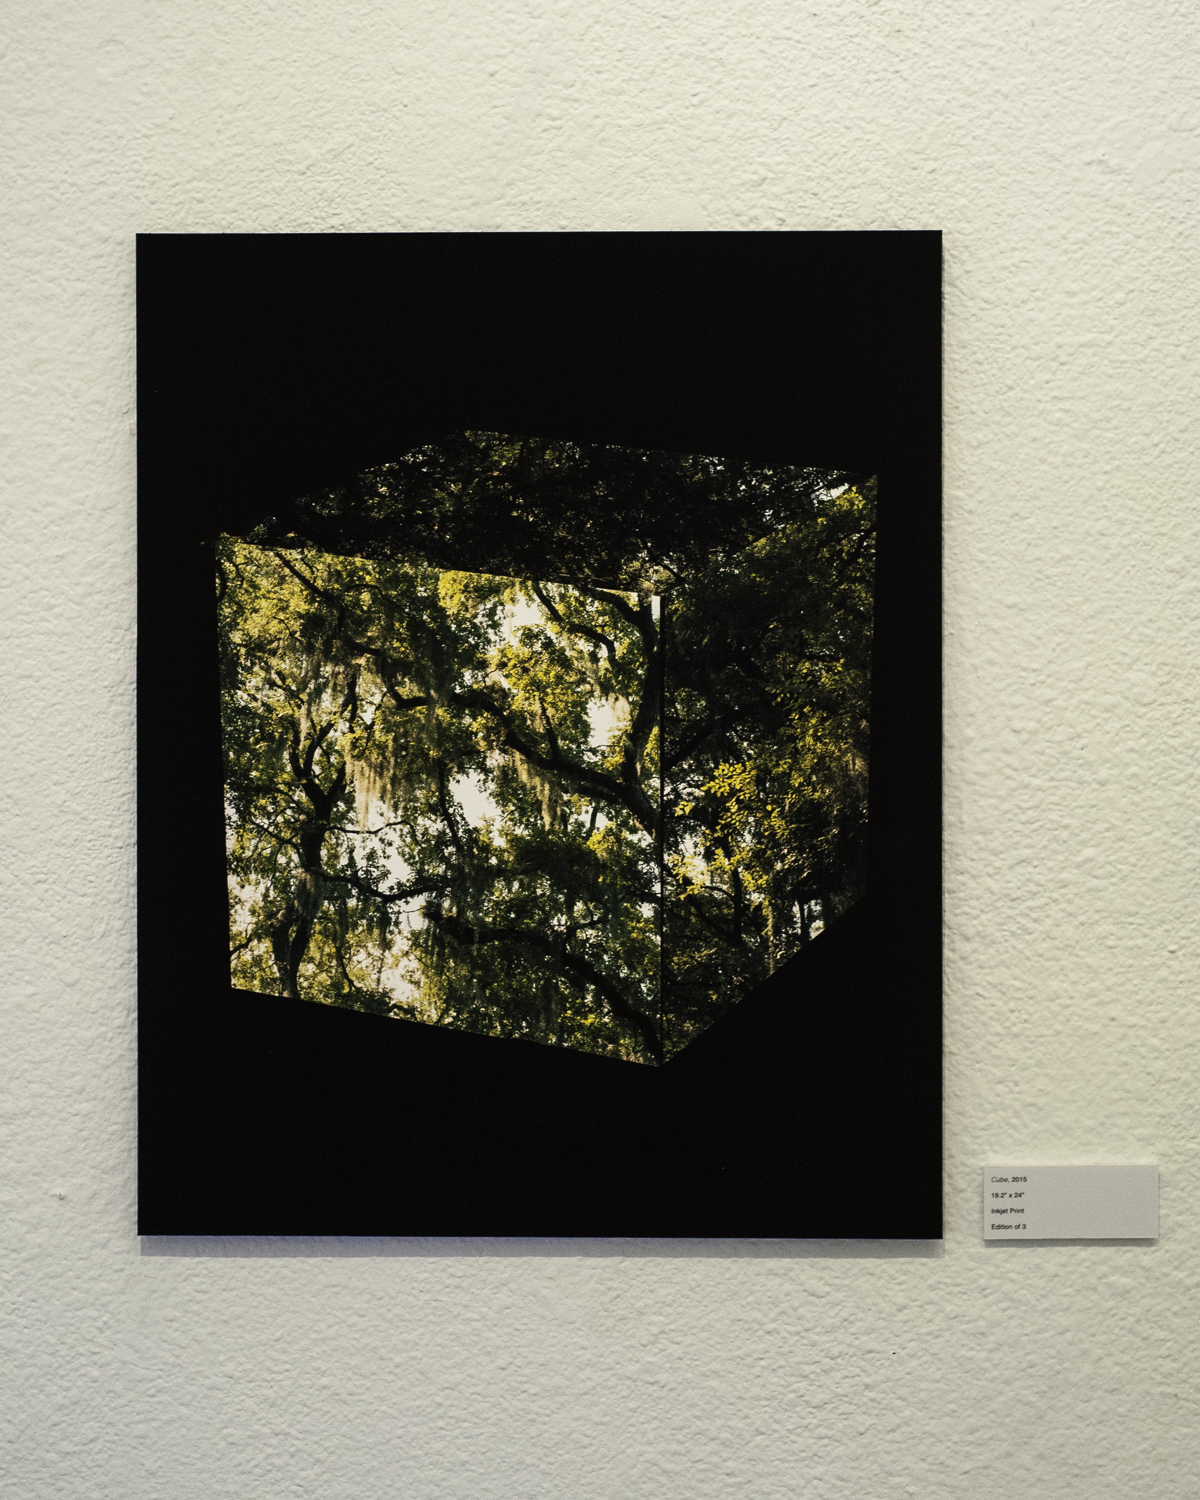   Cube , 2015  Digital Inkjet Print  19.2”x24” 